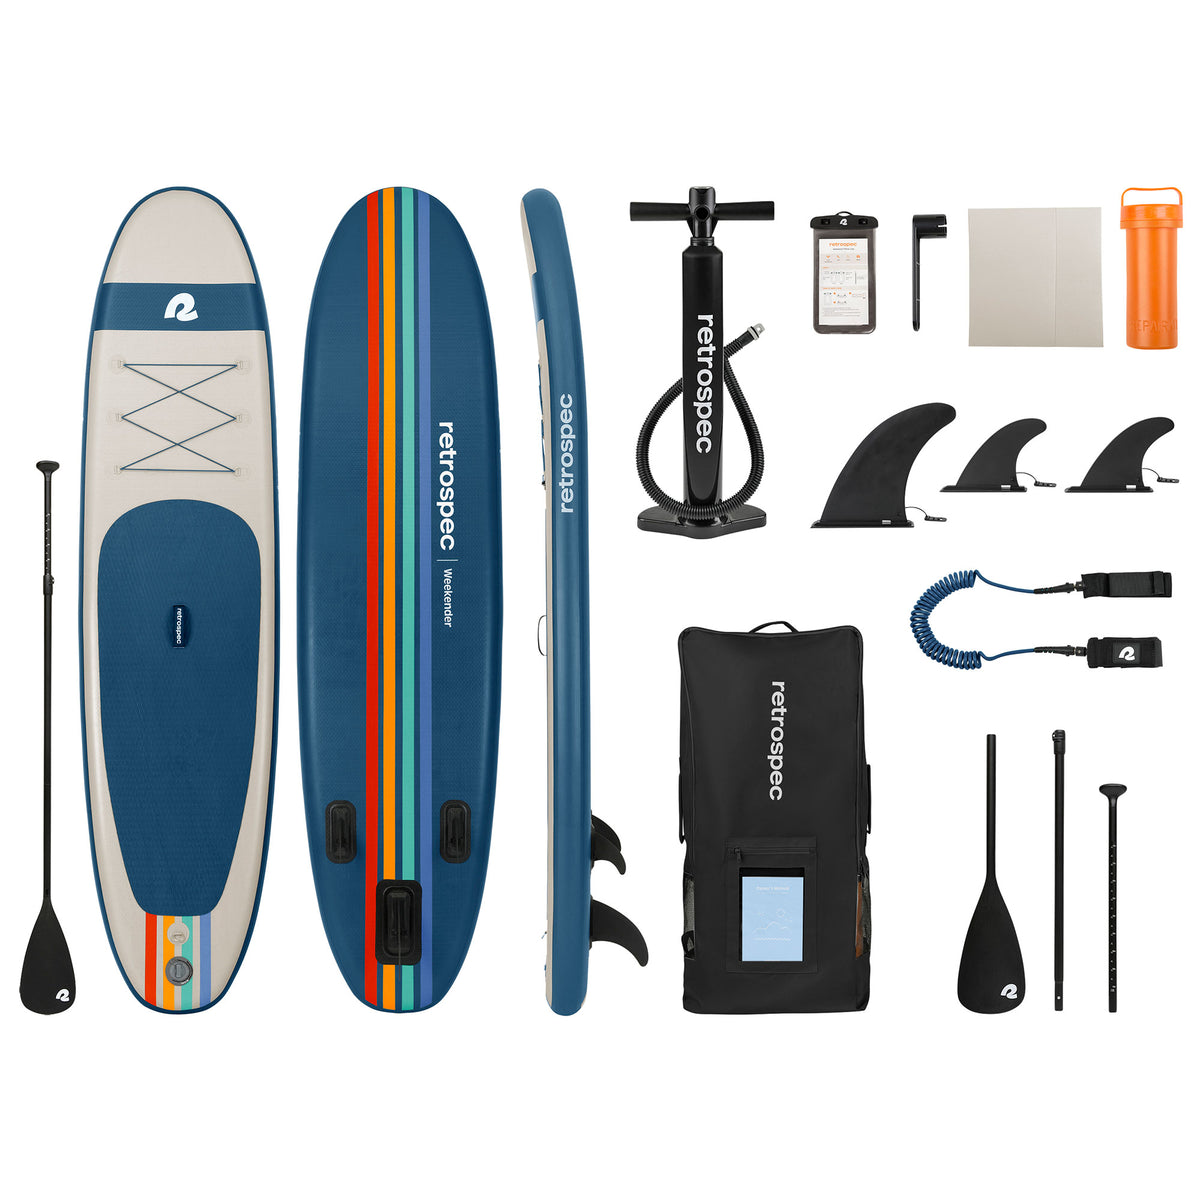 RETROSPEC WEEKENDER 10 TABLA PADDLE SURF HINCHABLE